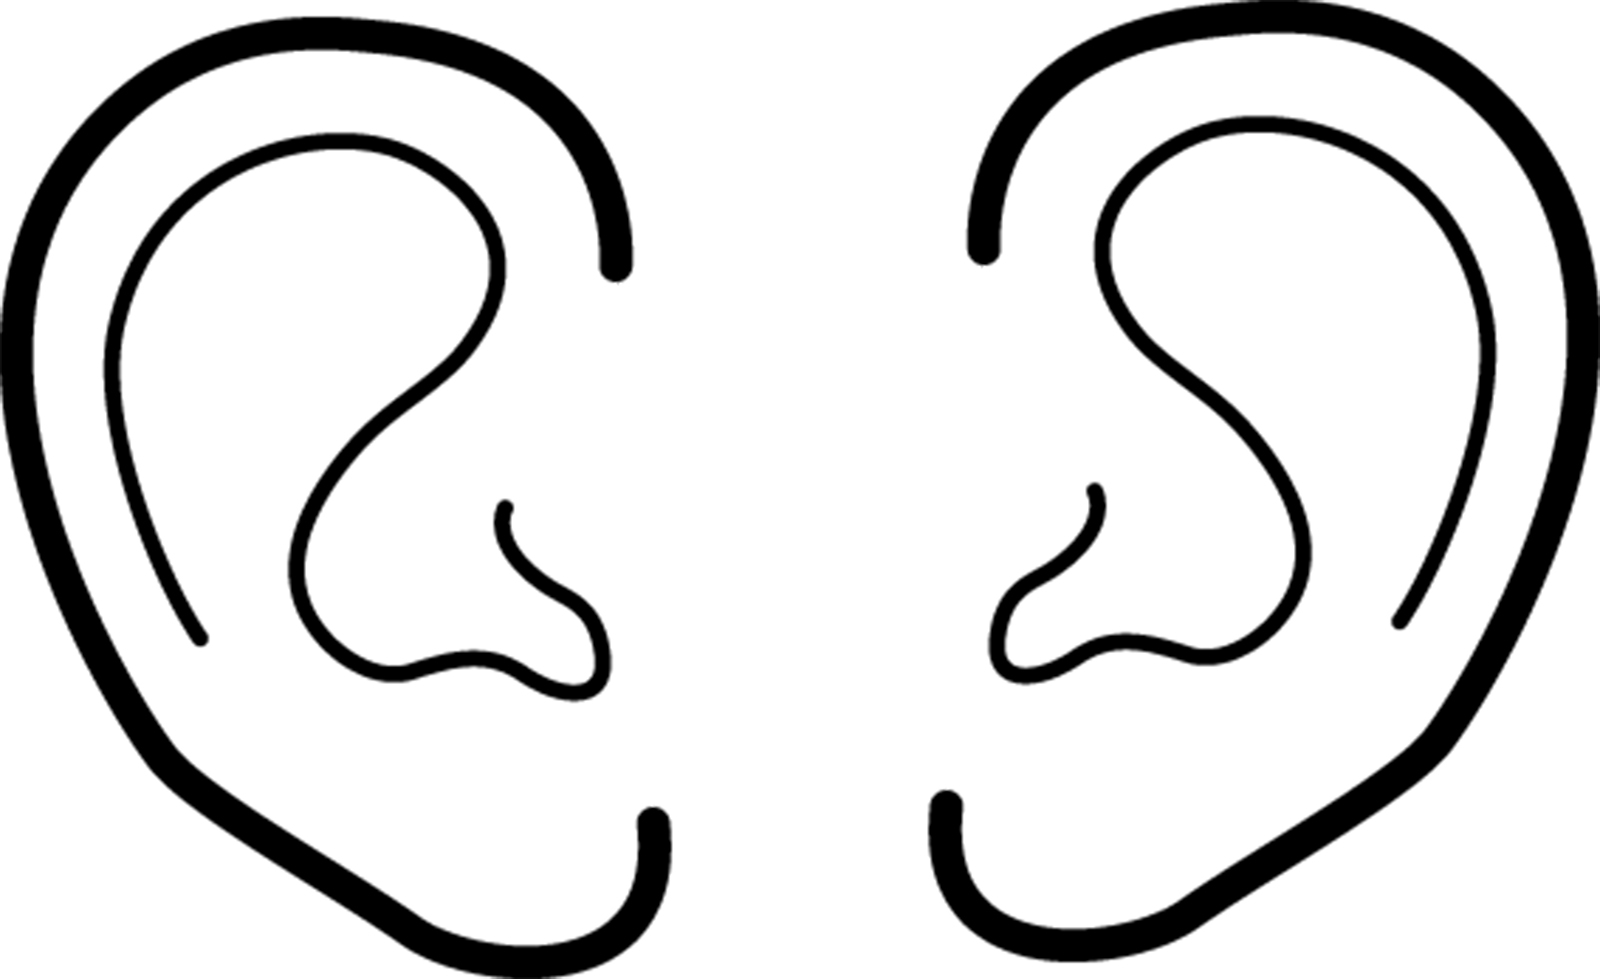 Ear clipart earclipart images - Clipart Ear